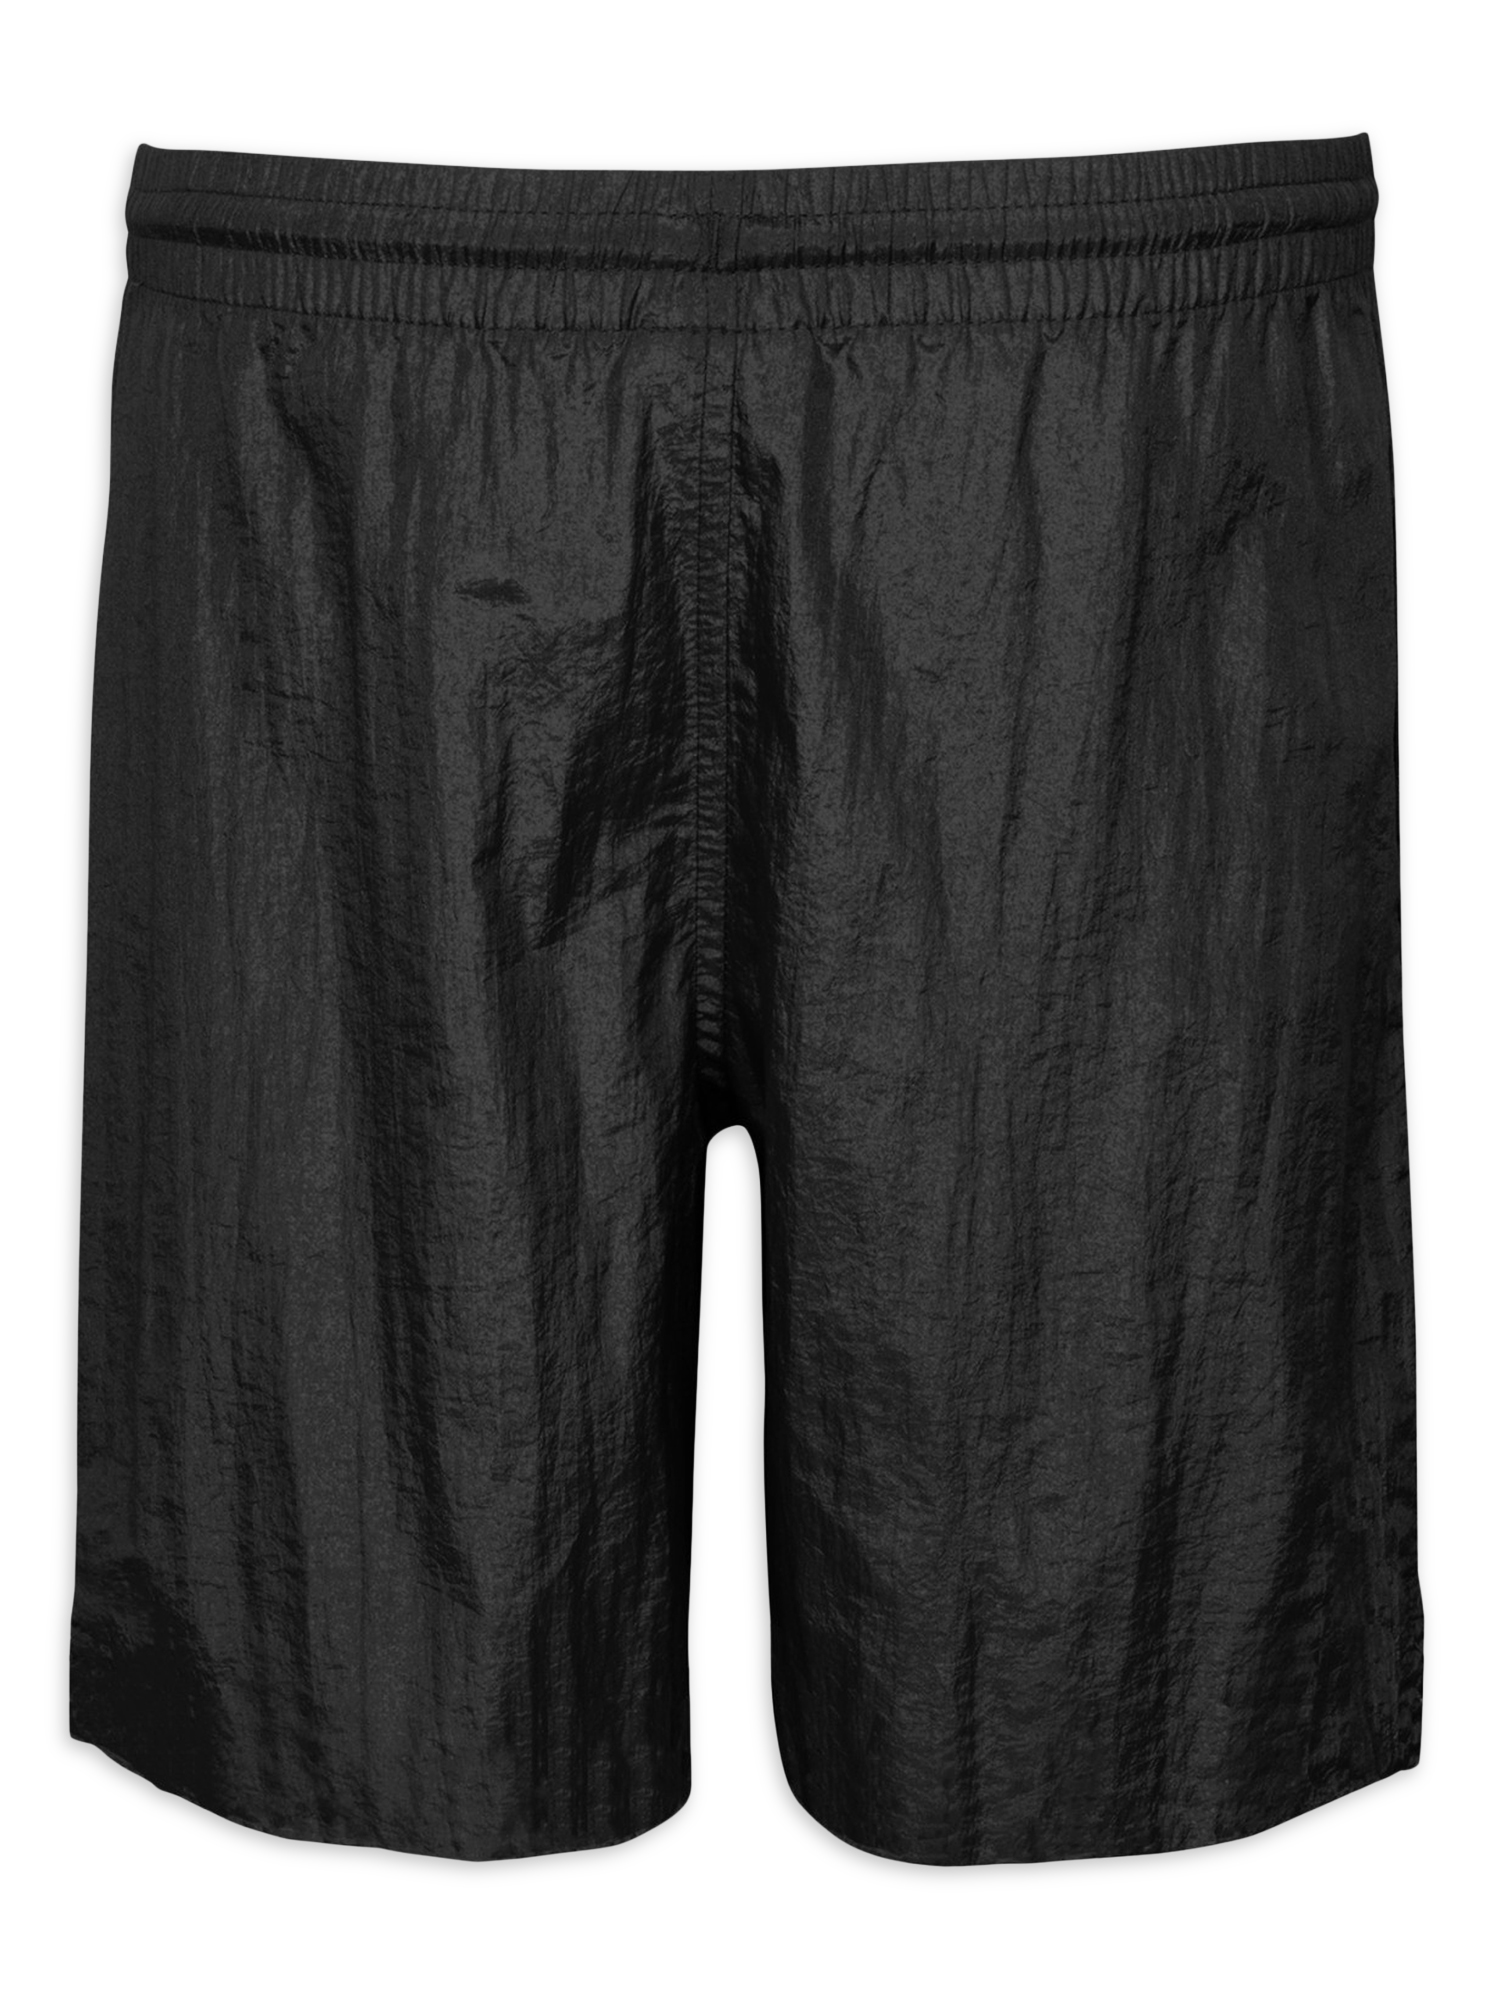 Umbro Boys Retro Diamond Soccer Jerseys and Shorts 4-Piece Outfit Set, Sizes 4-18 - image 3 of 9